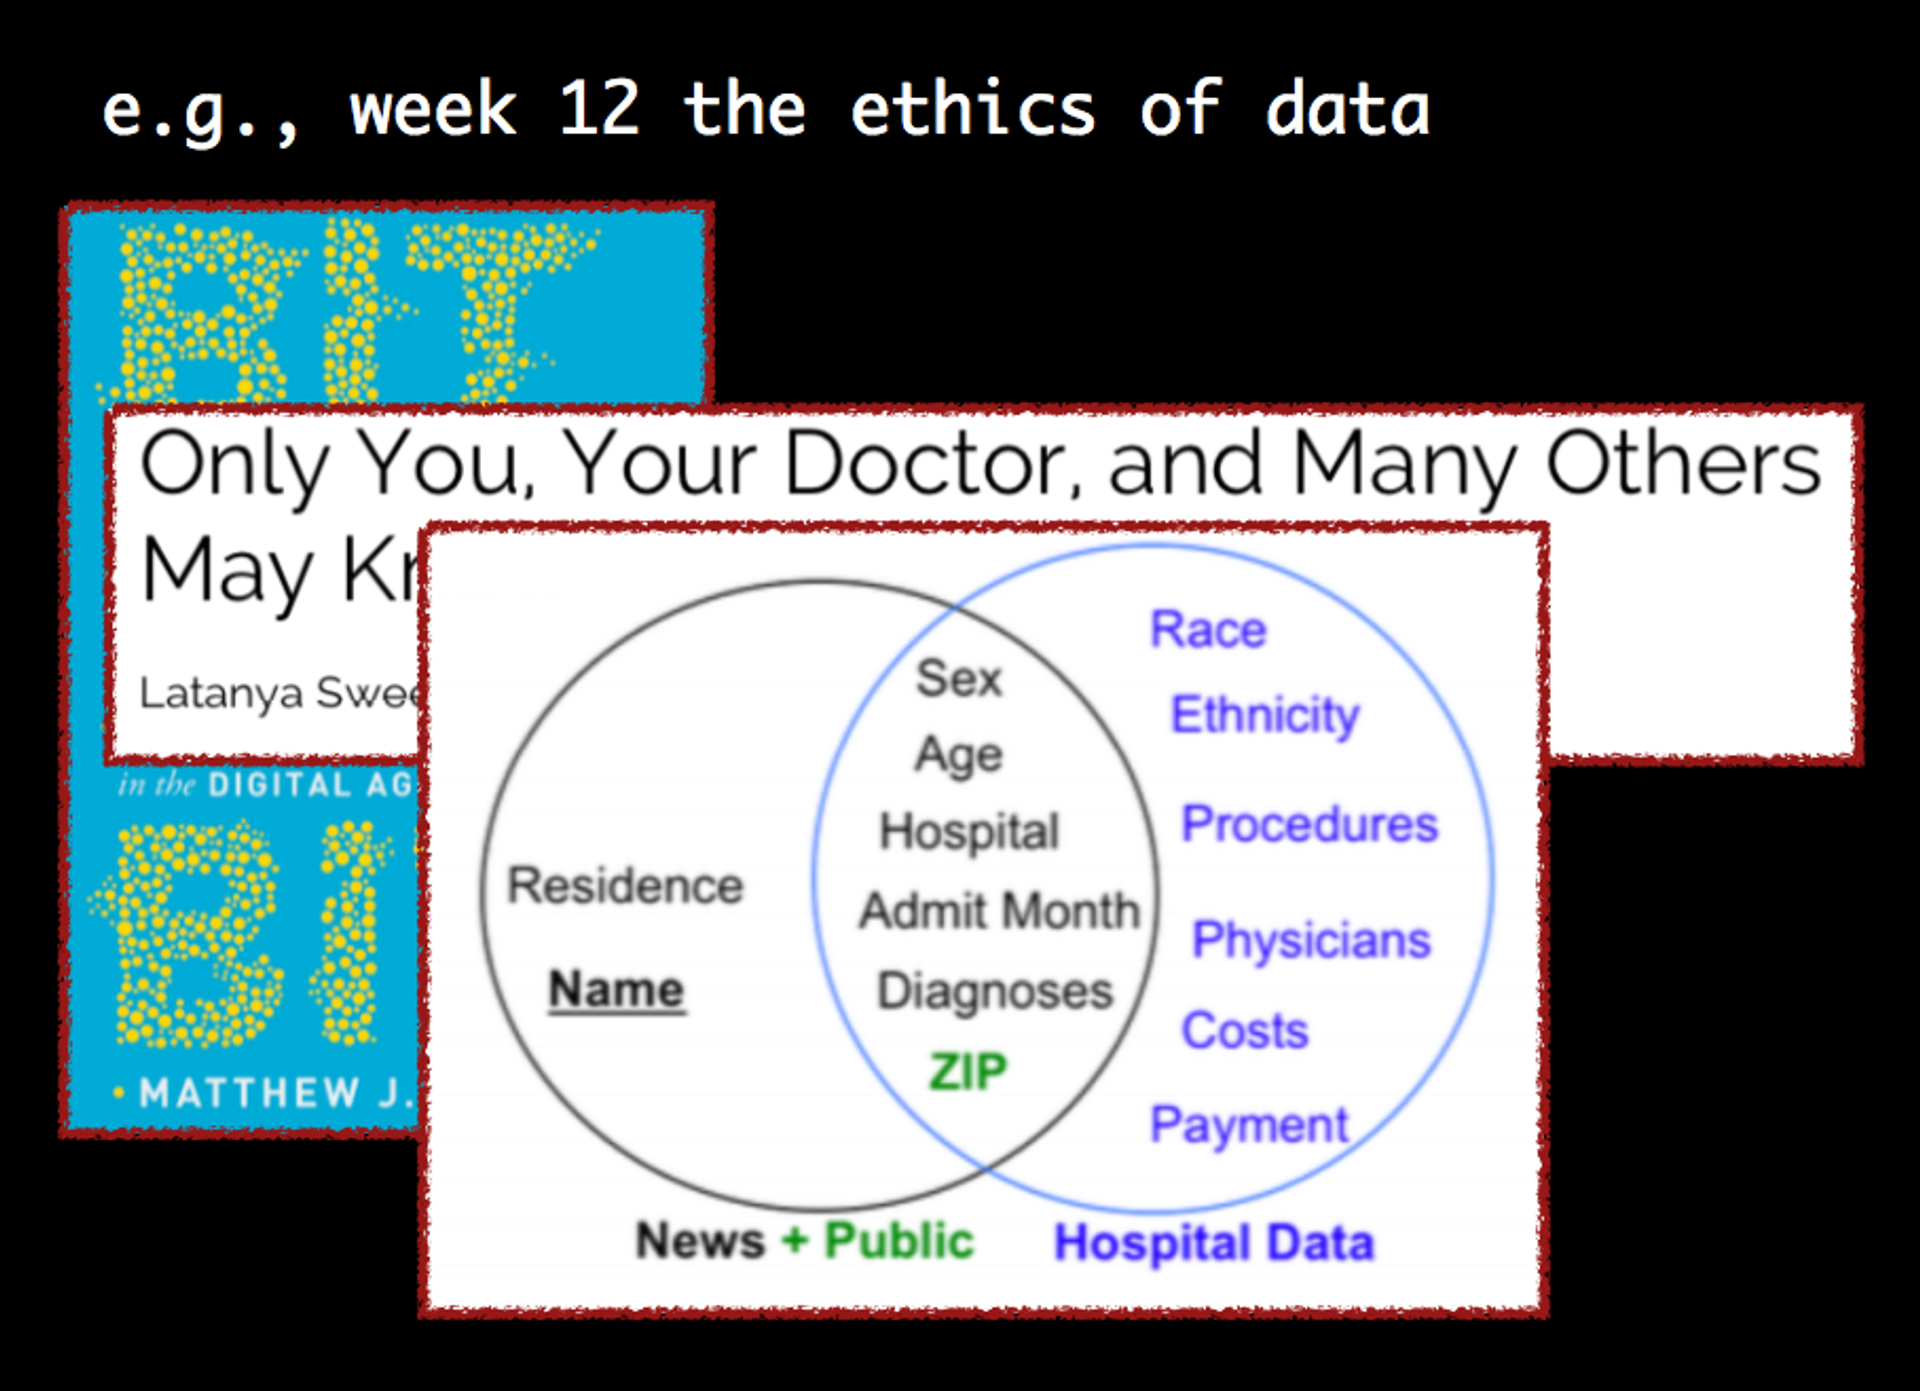 venn diagram of news/public and hospital data